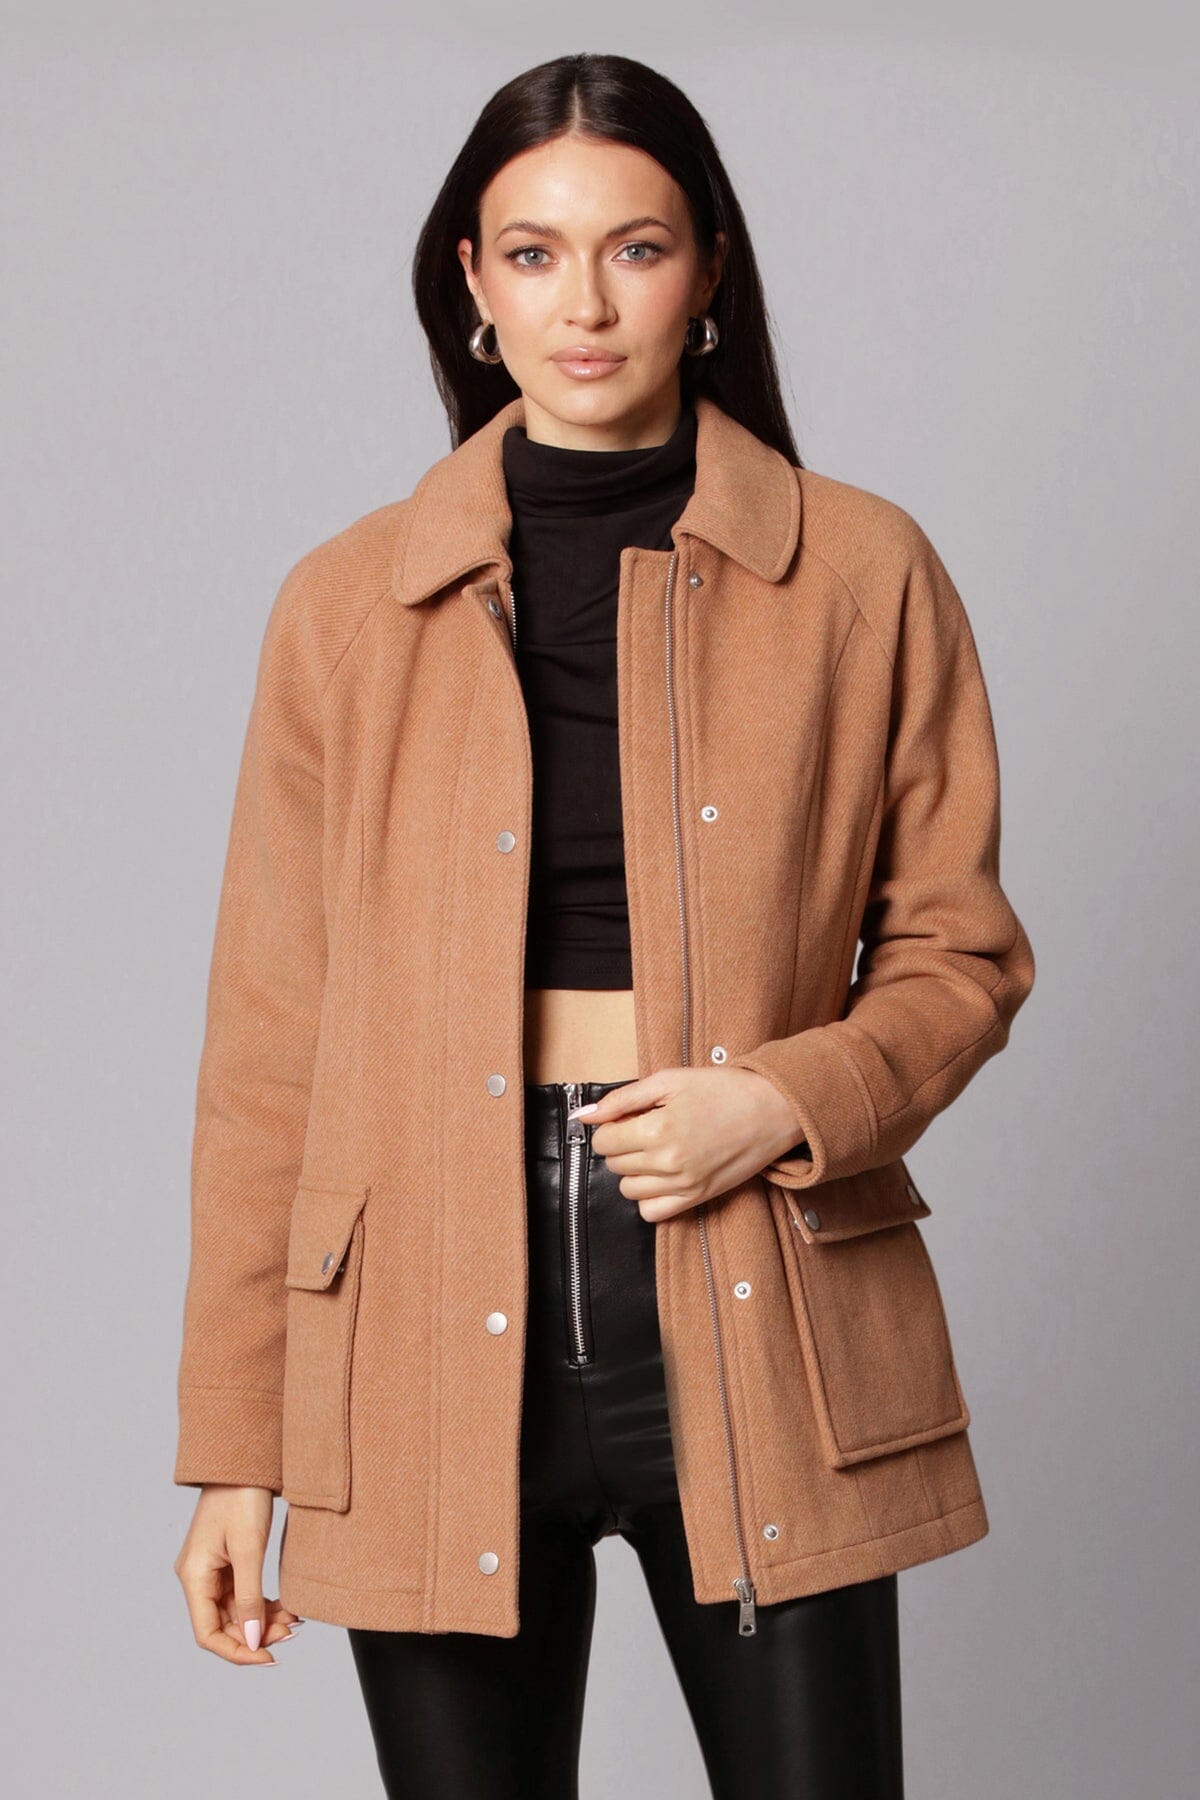 Light brown twill wool blend zip-front jacket coat outerwear - figure flattering casual to dressy jackets coats for women